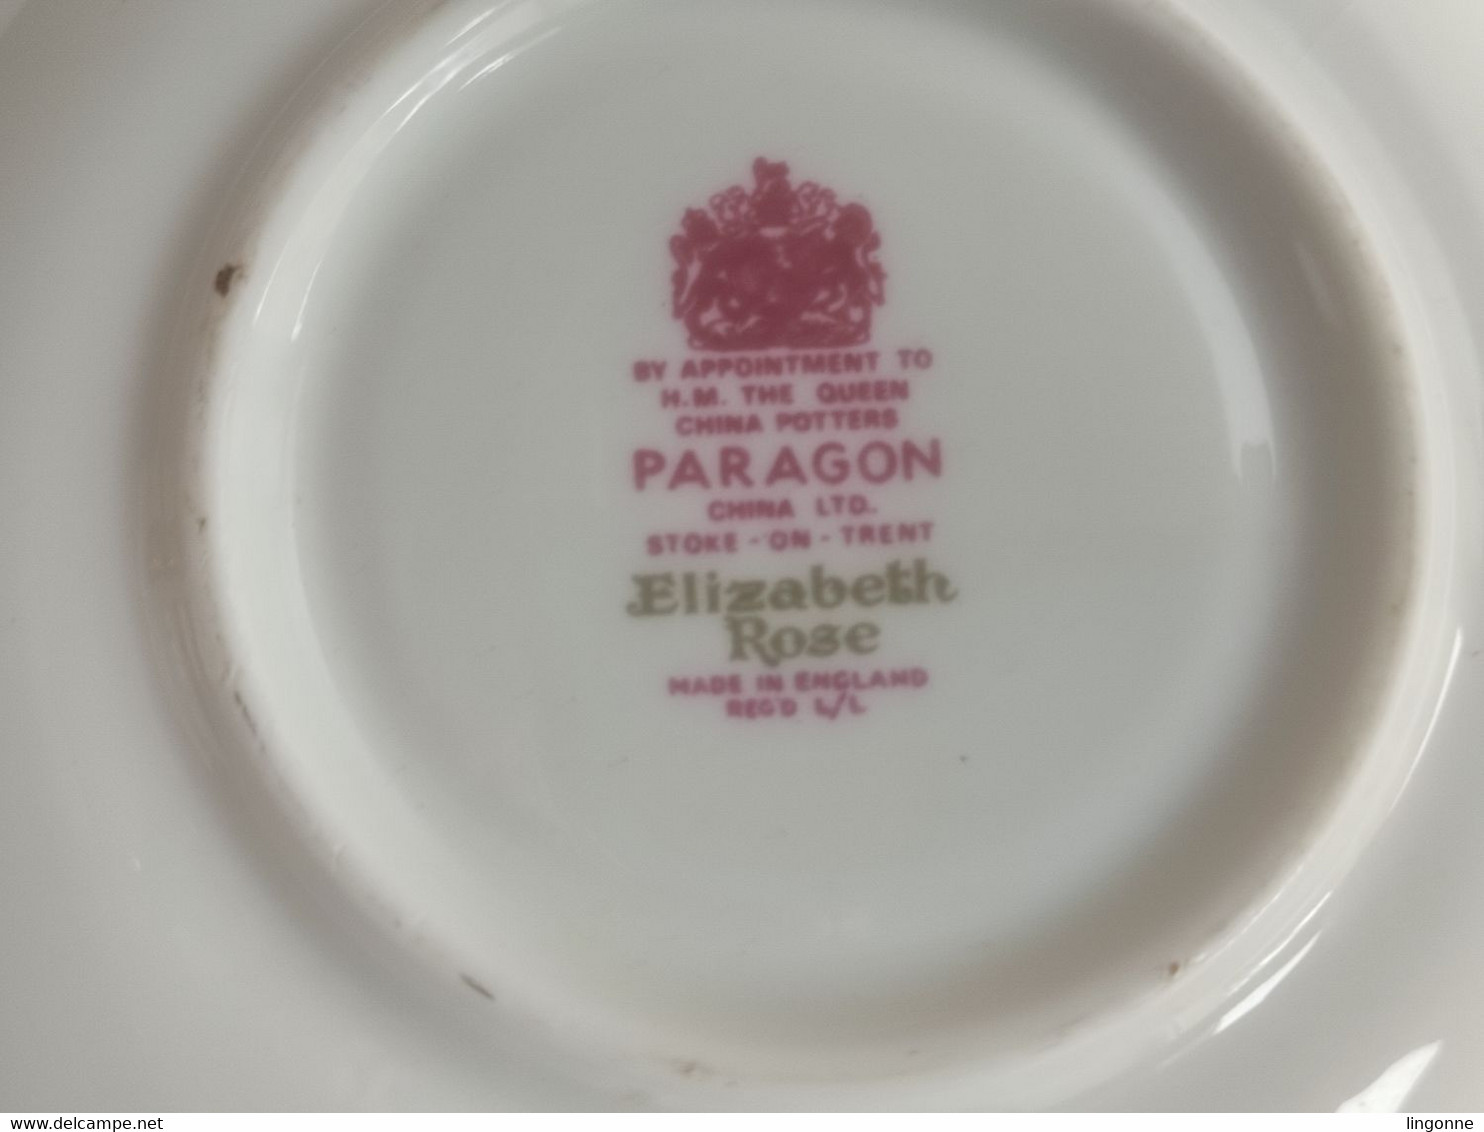 Tasse à Café et soucoupe porcelaine Paragon Fine Bone China Made in Angleterre Elizabeth Rose poids 189 Grammes